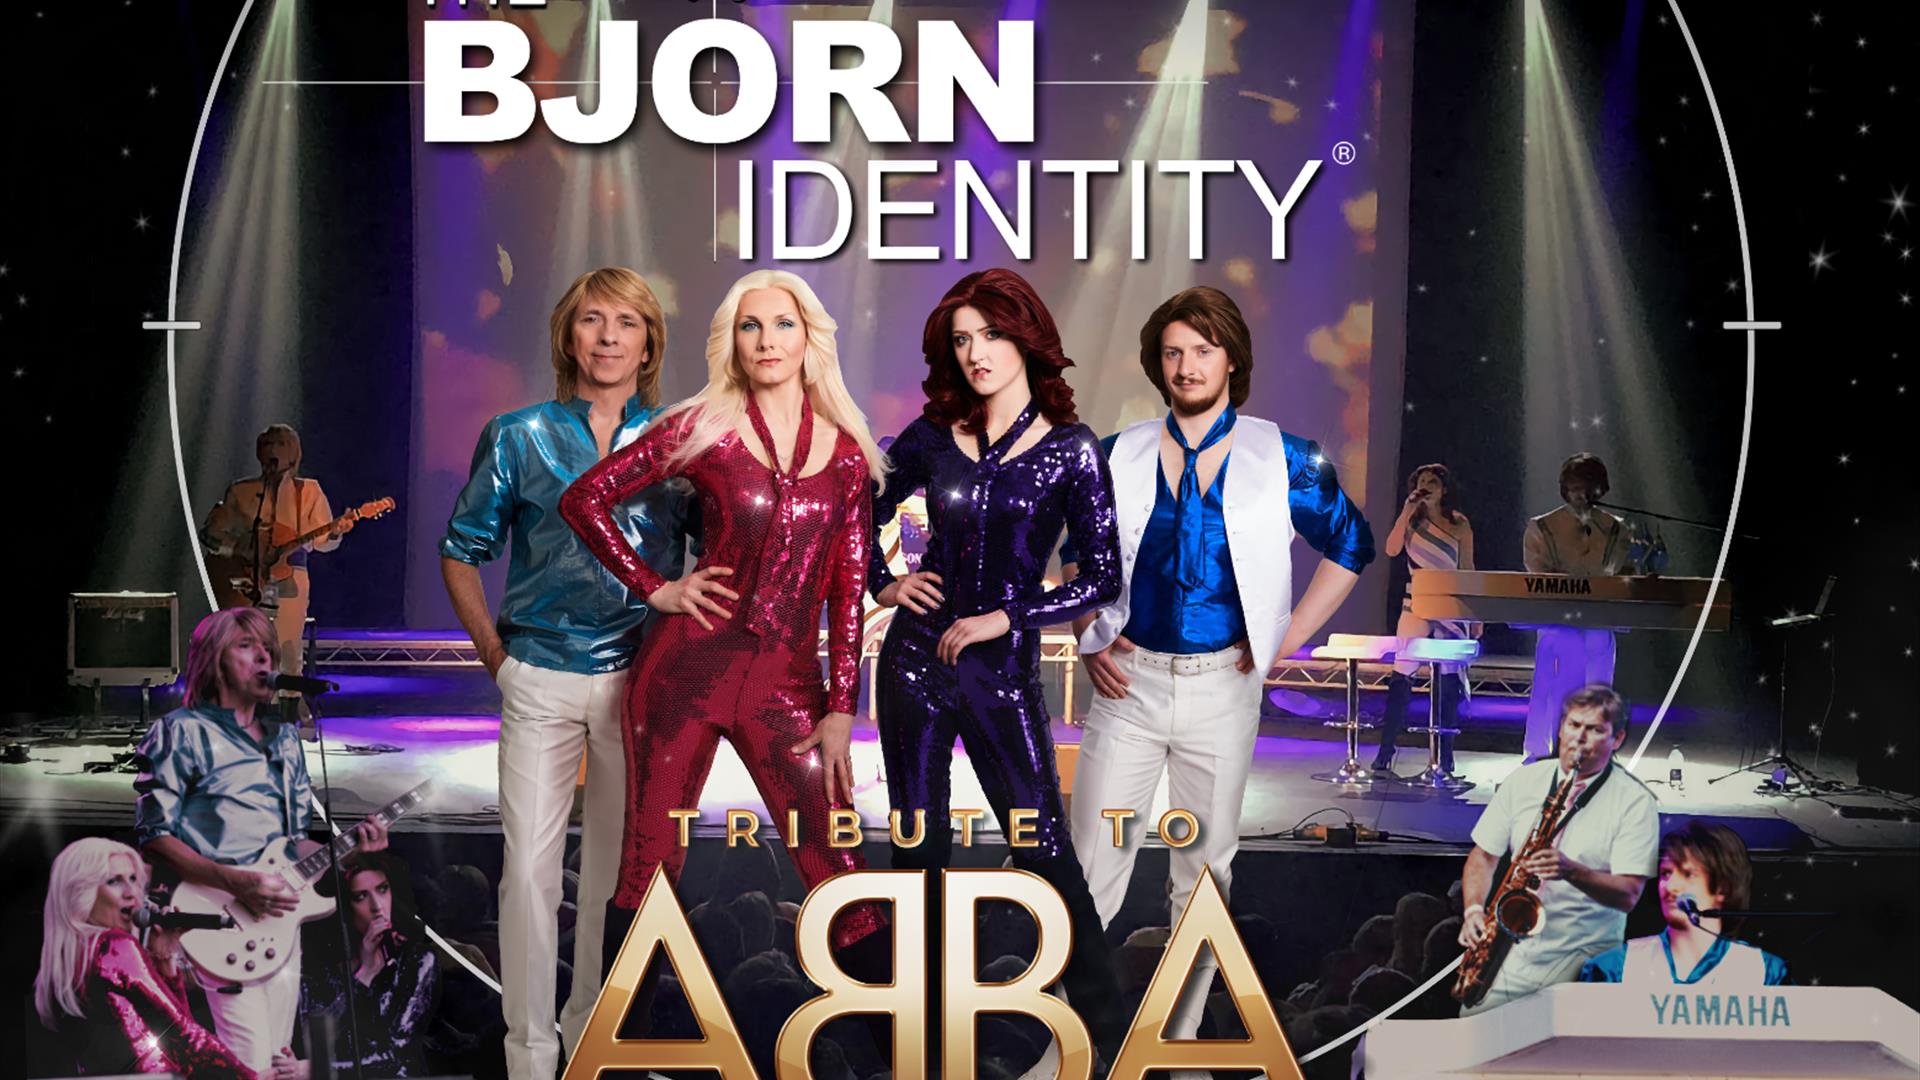 ABBA TRIBUTE SHOW STARRING BJORN IDENTITY